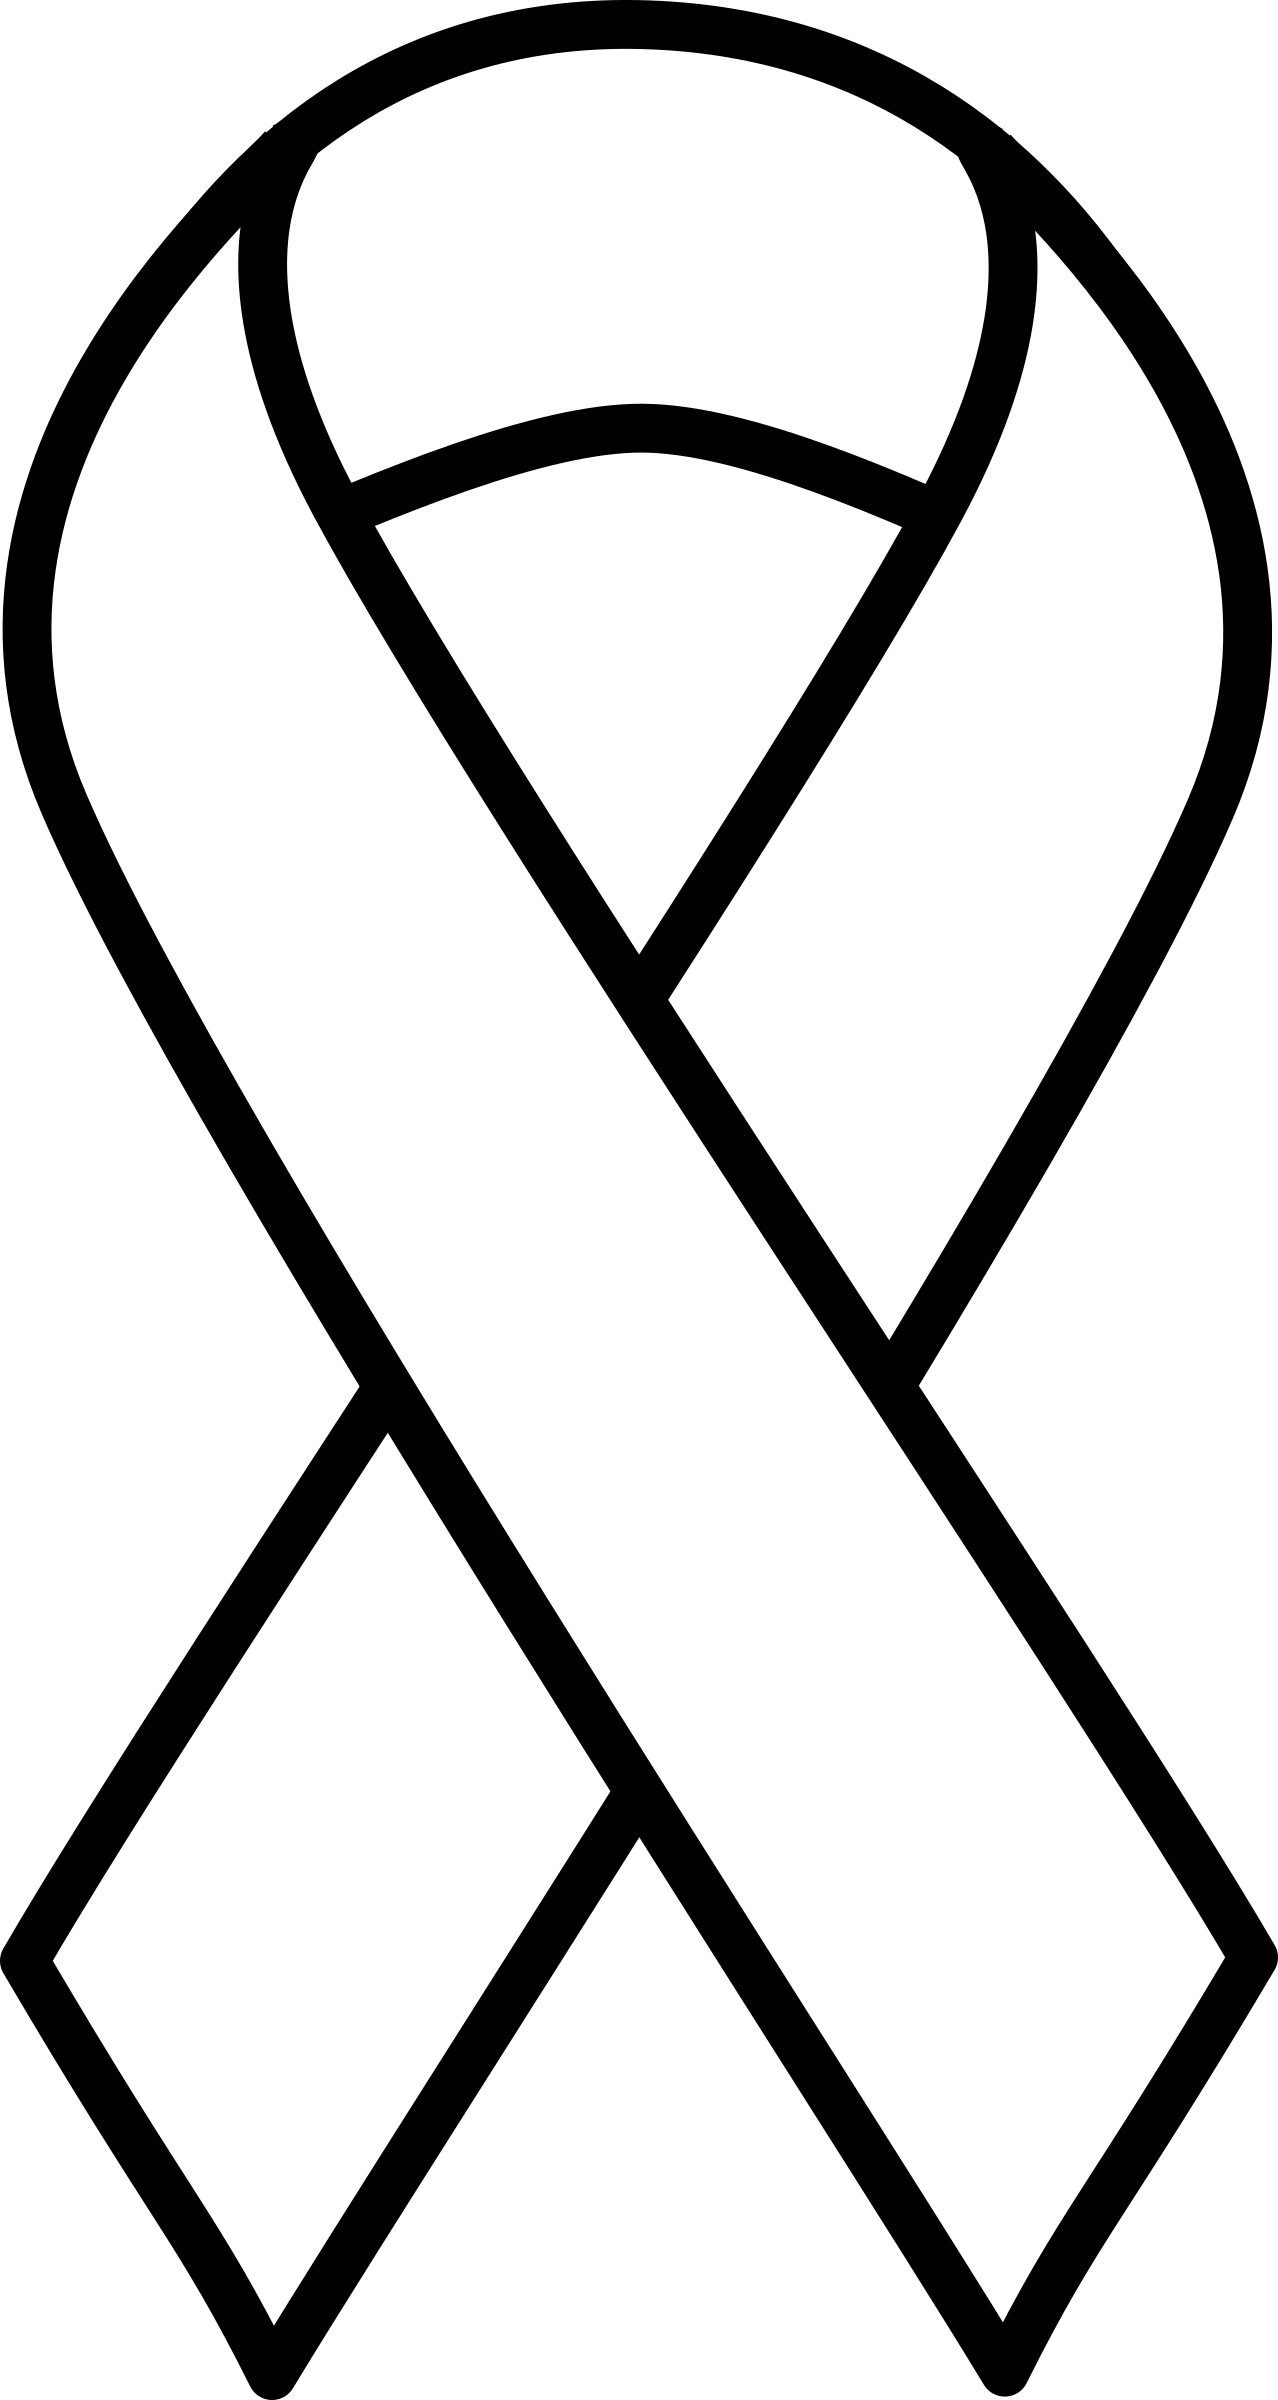 Clipart cancer ribbon - ClipartFox